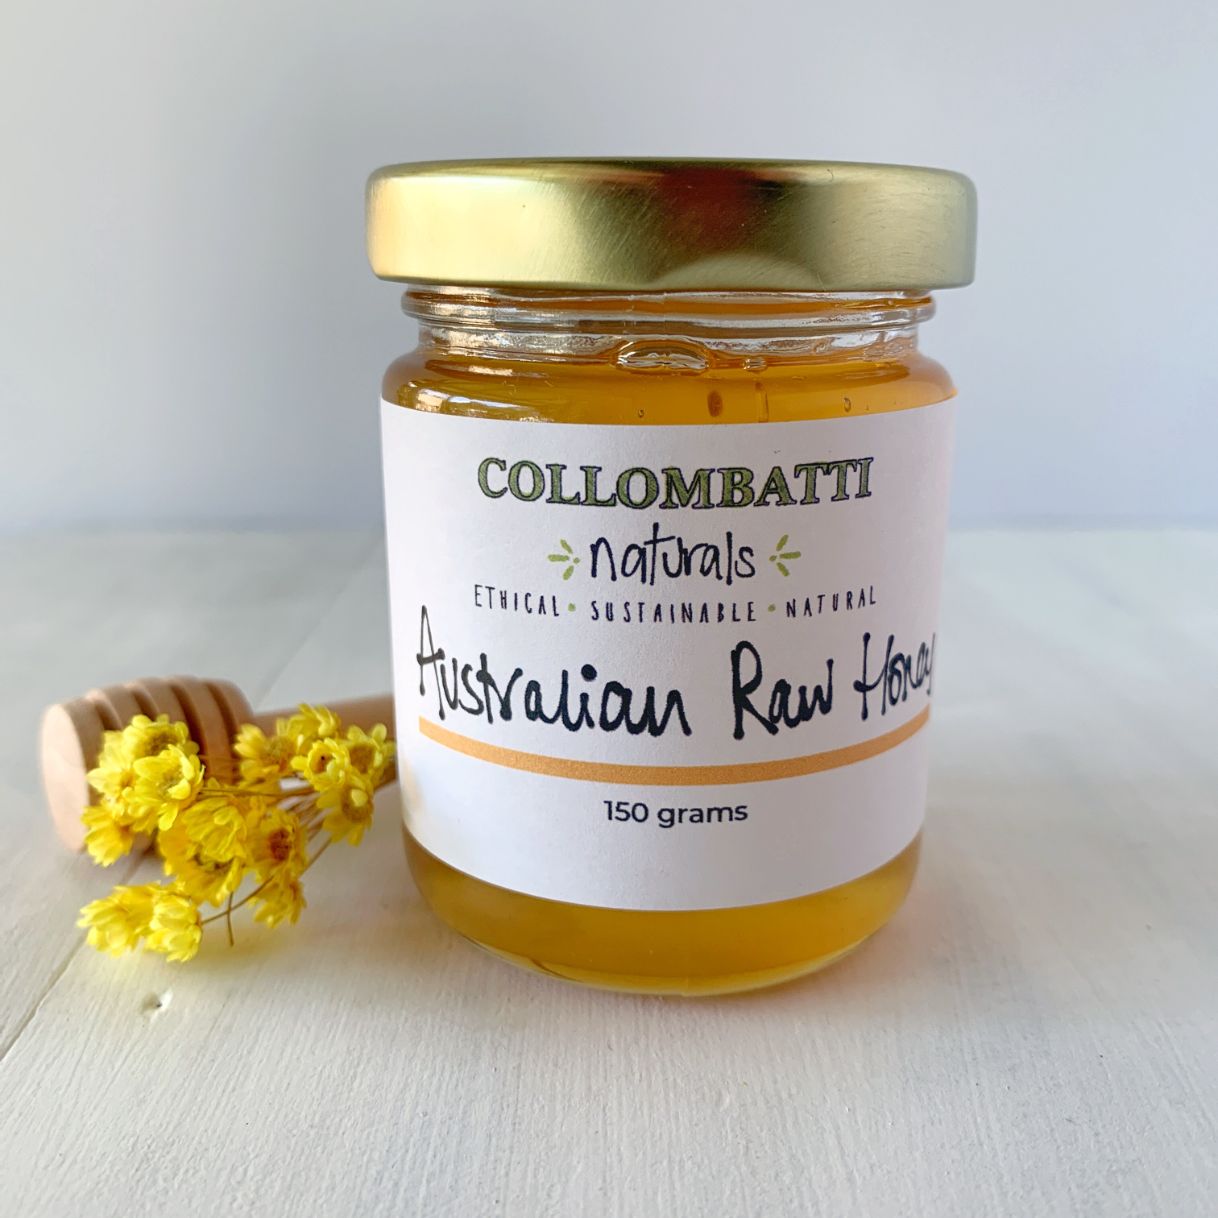 Collombatti Naturals raw Australian honey packed in glass with yellow flowers